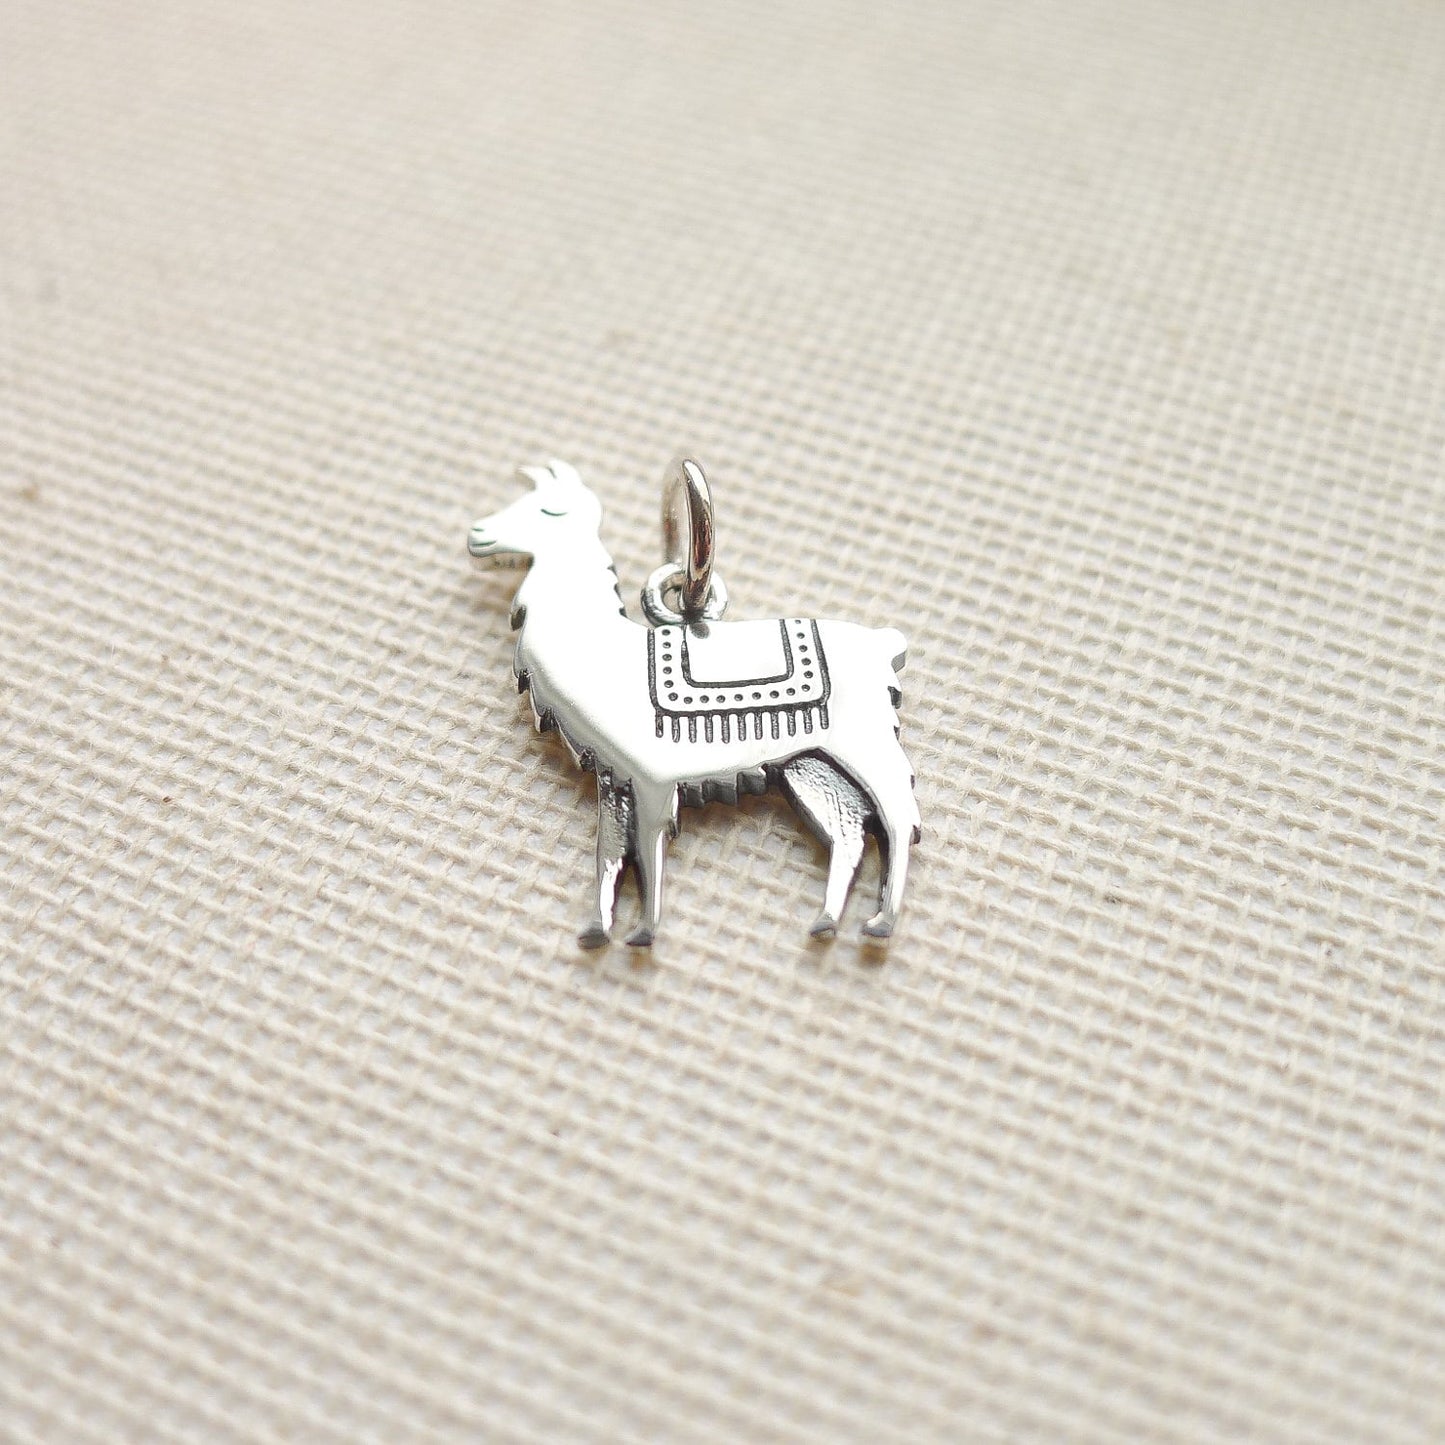 Llama Charm Sterling Silver Cute Animal Pendant